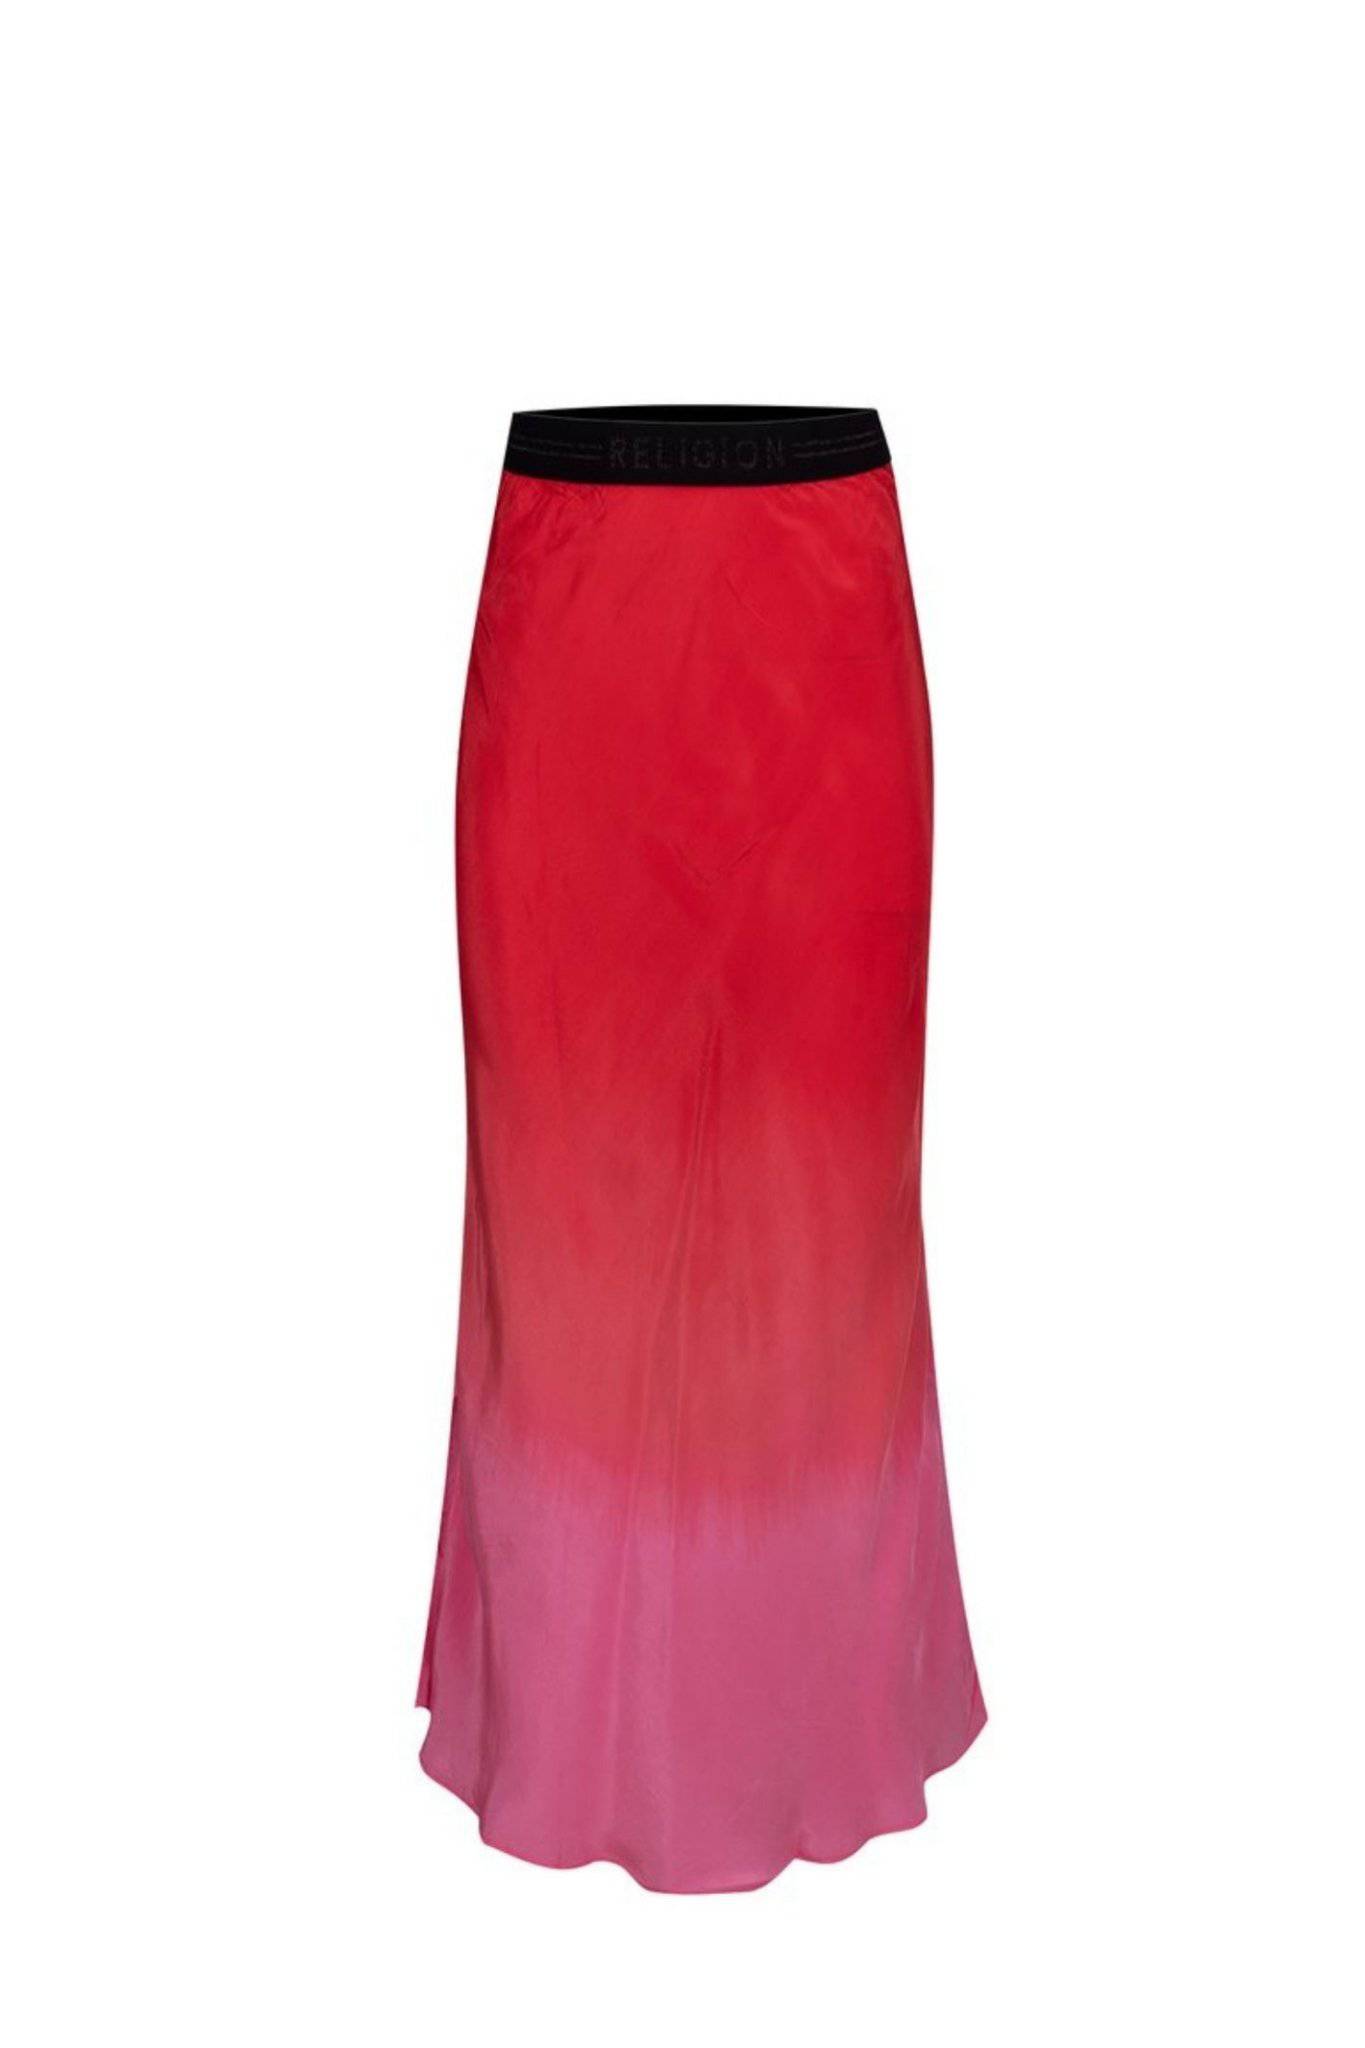 Religion Famous Poppy Red Skirt - Jezabel Boutique